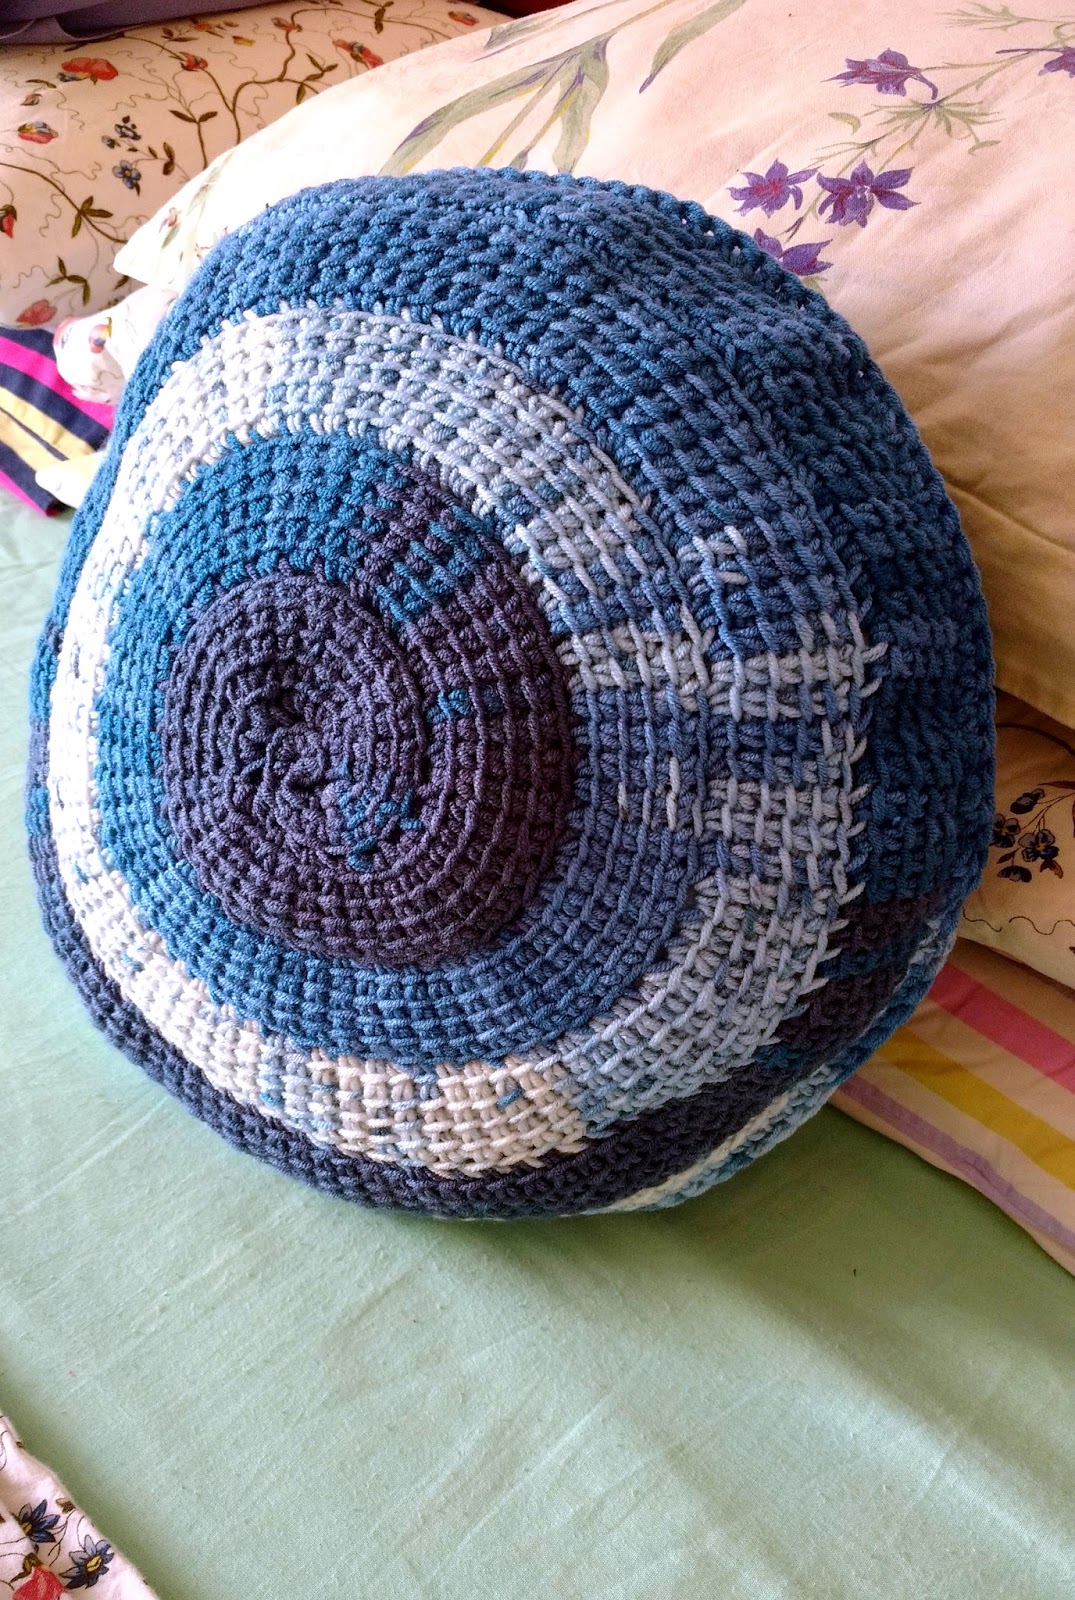 Crochet a rug, bag or cushion cover using t-shirt yarn - Knit & Crochet Blog